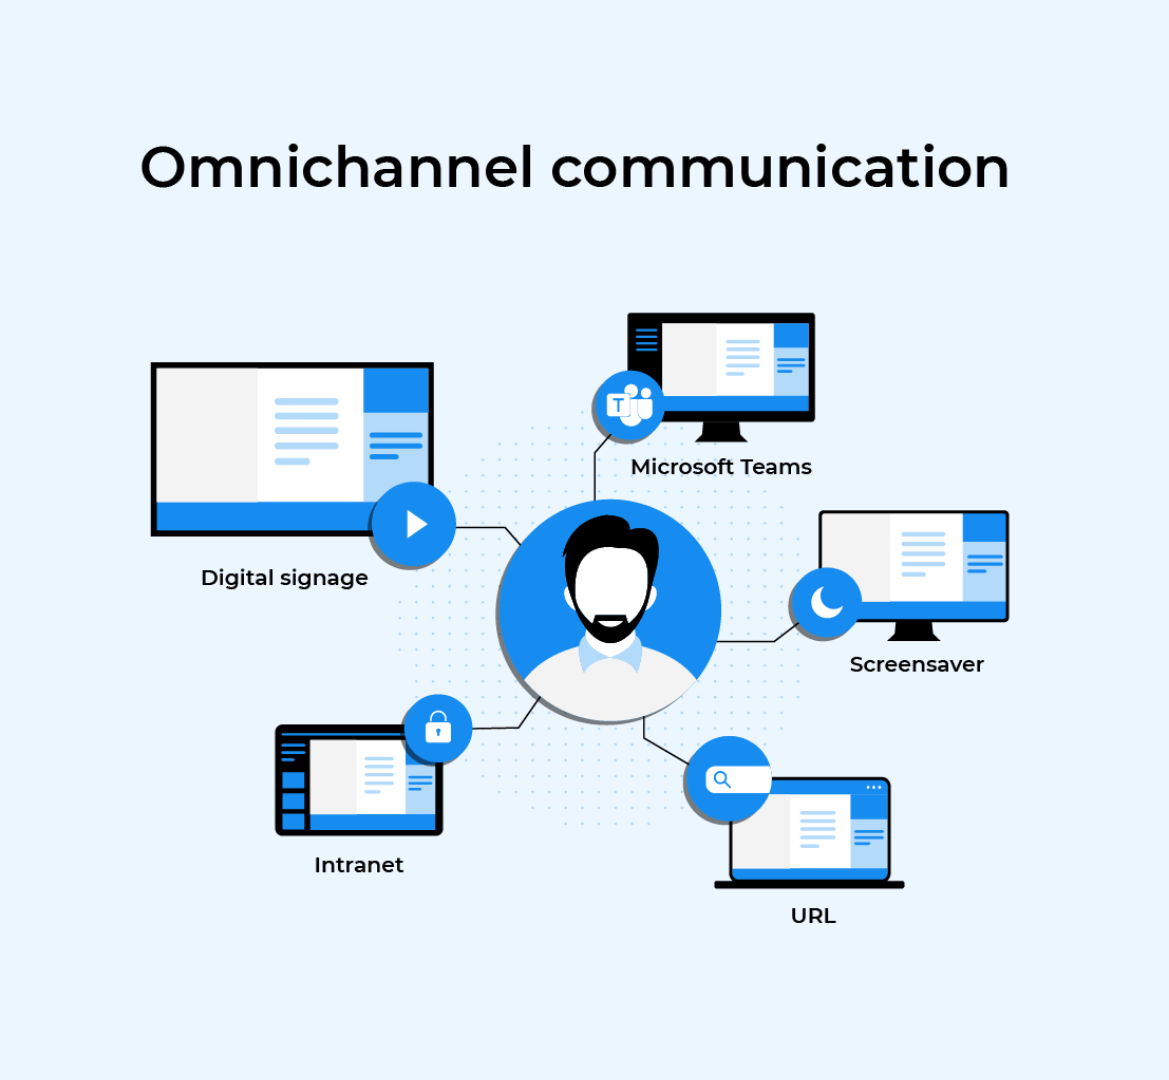 Omnichannel communication